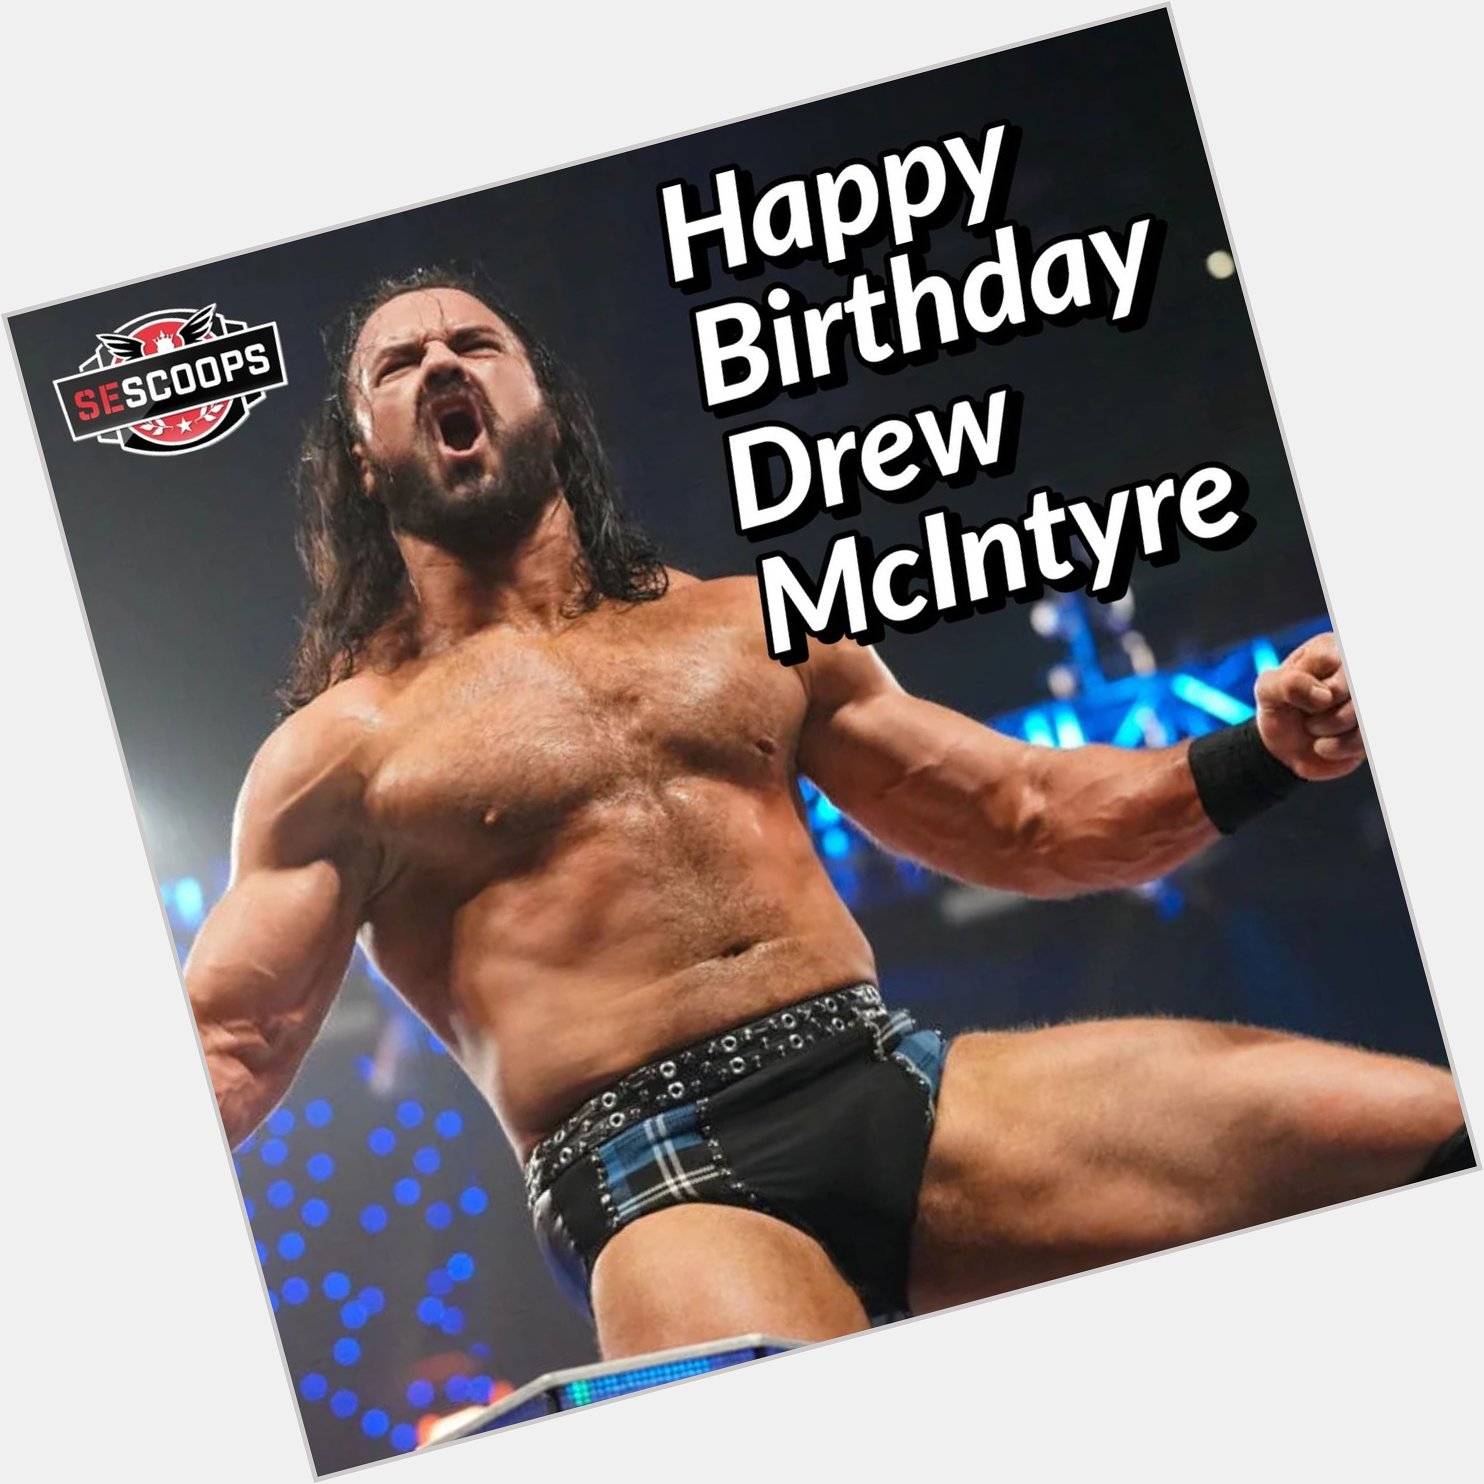 Happy Birthday Drew McIntyre, wherever you are!  